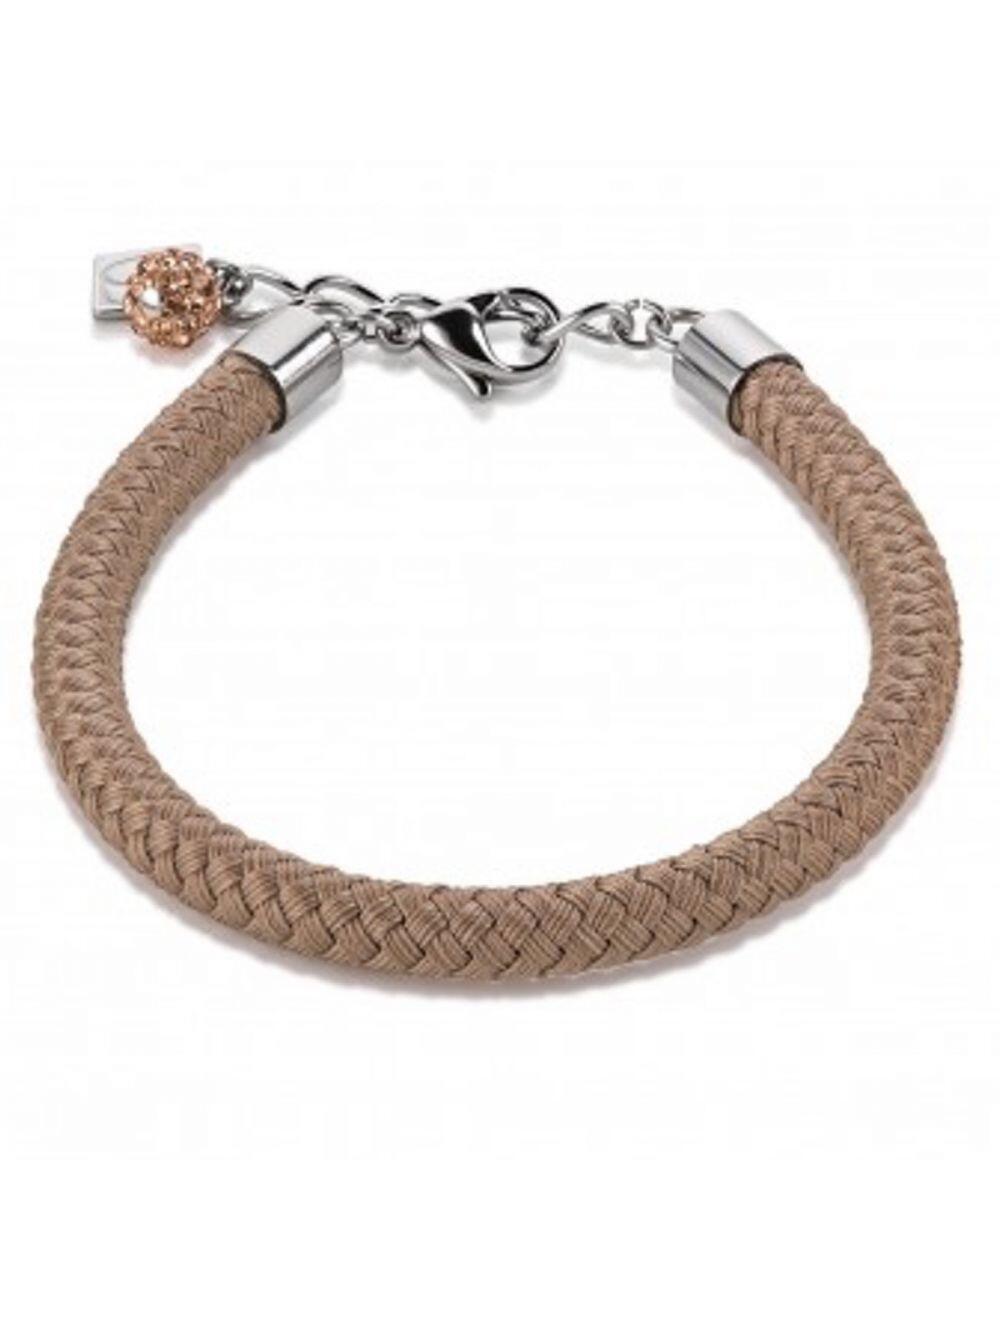 # Lionheart Bracelet